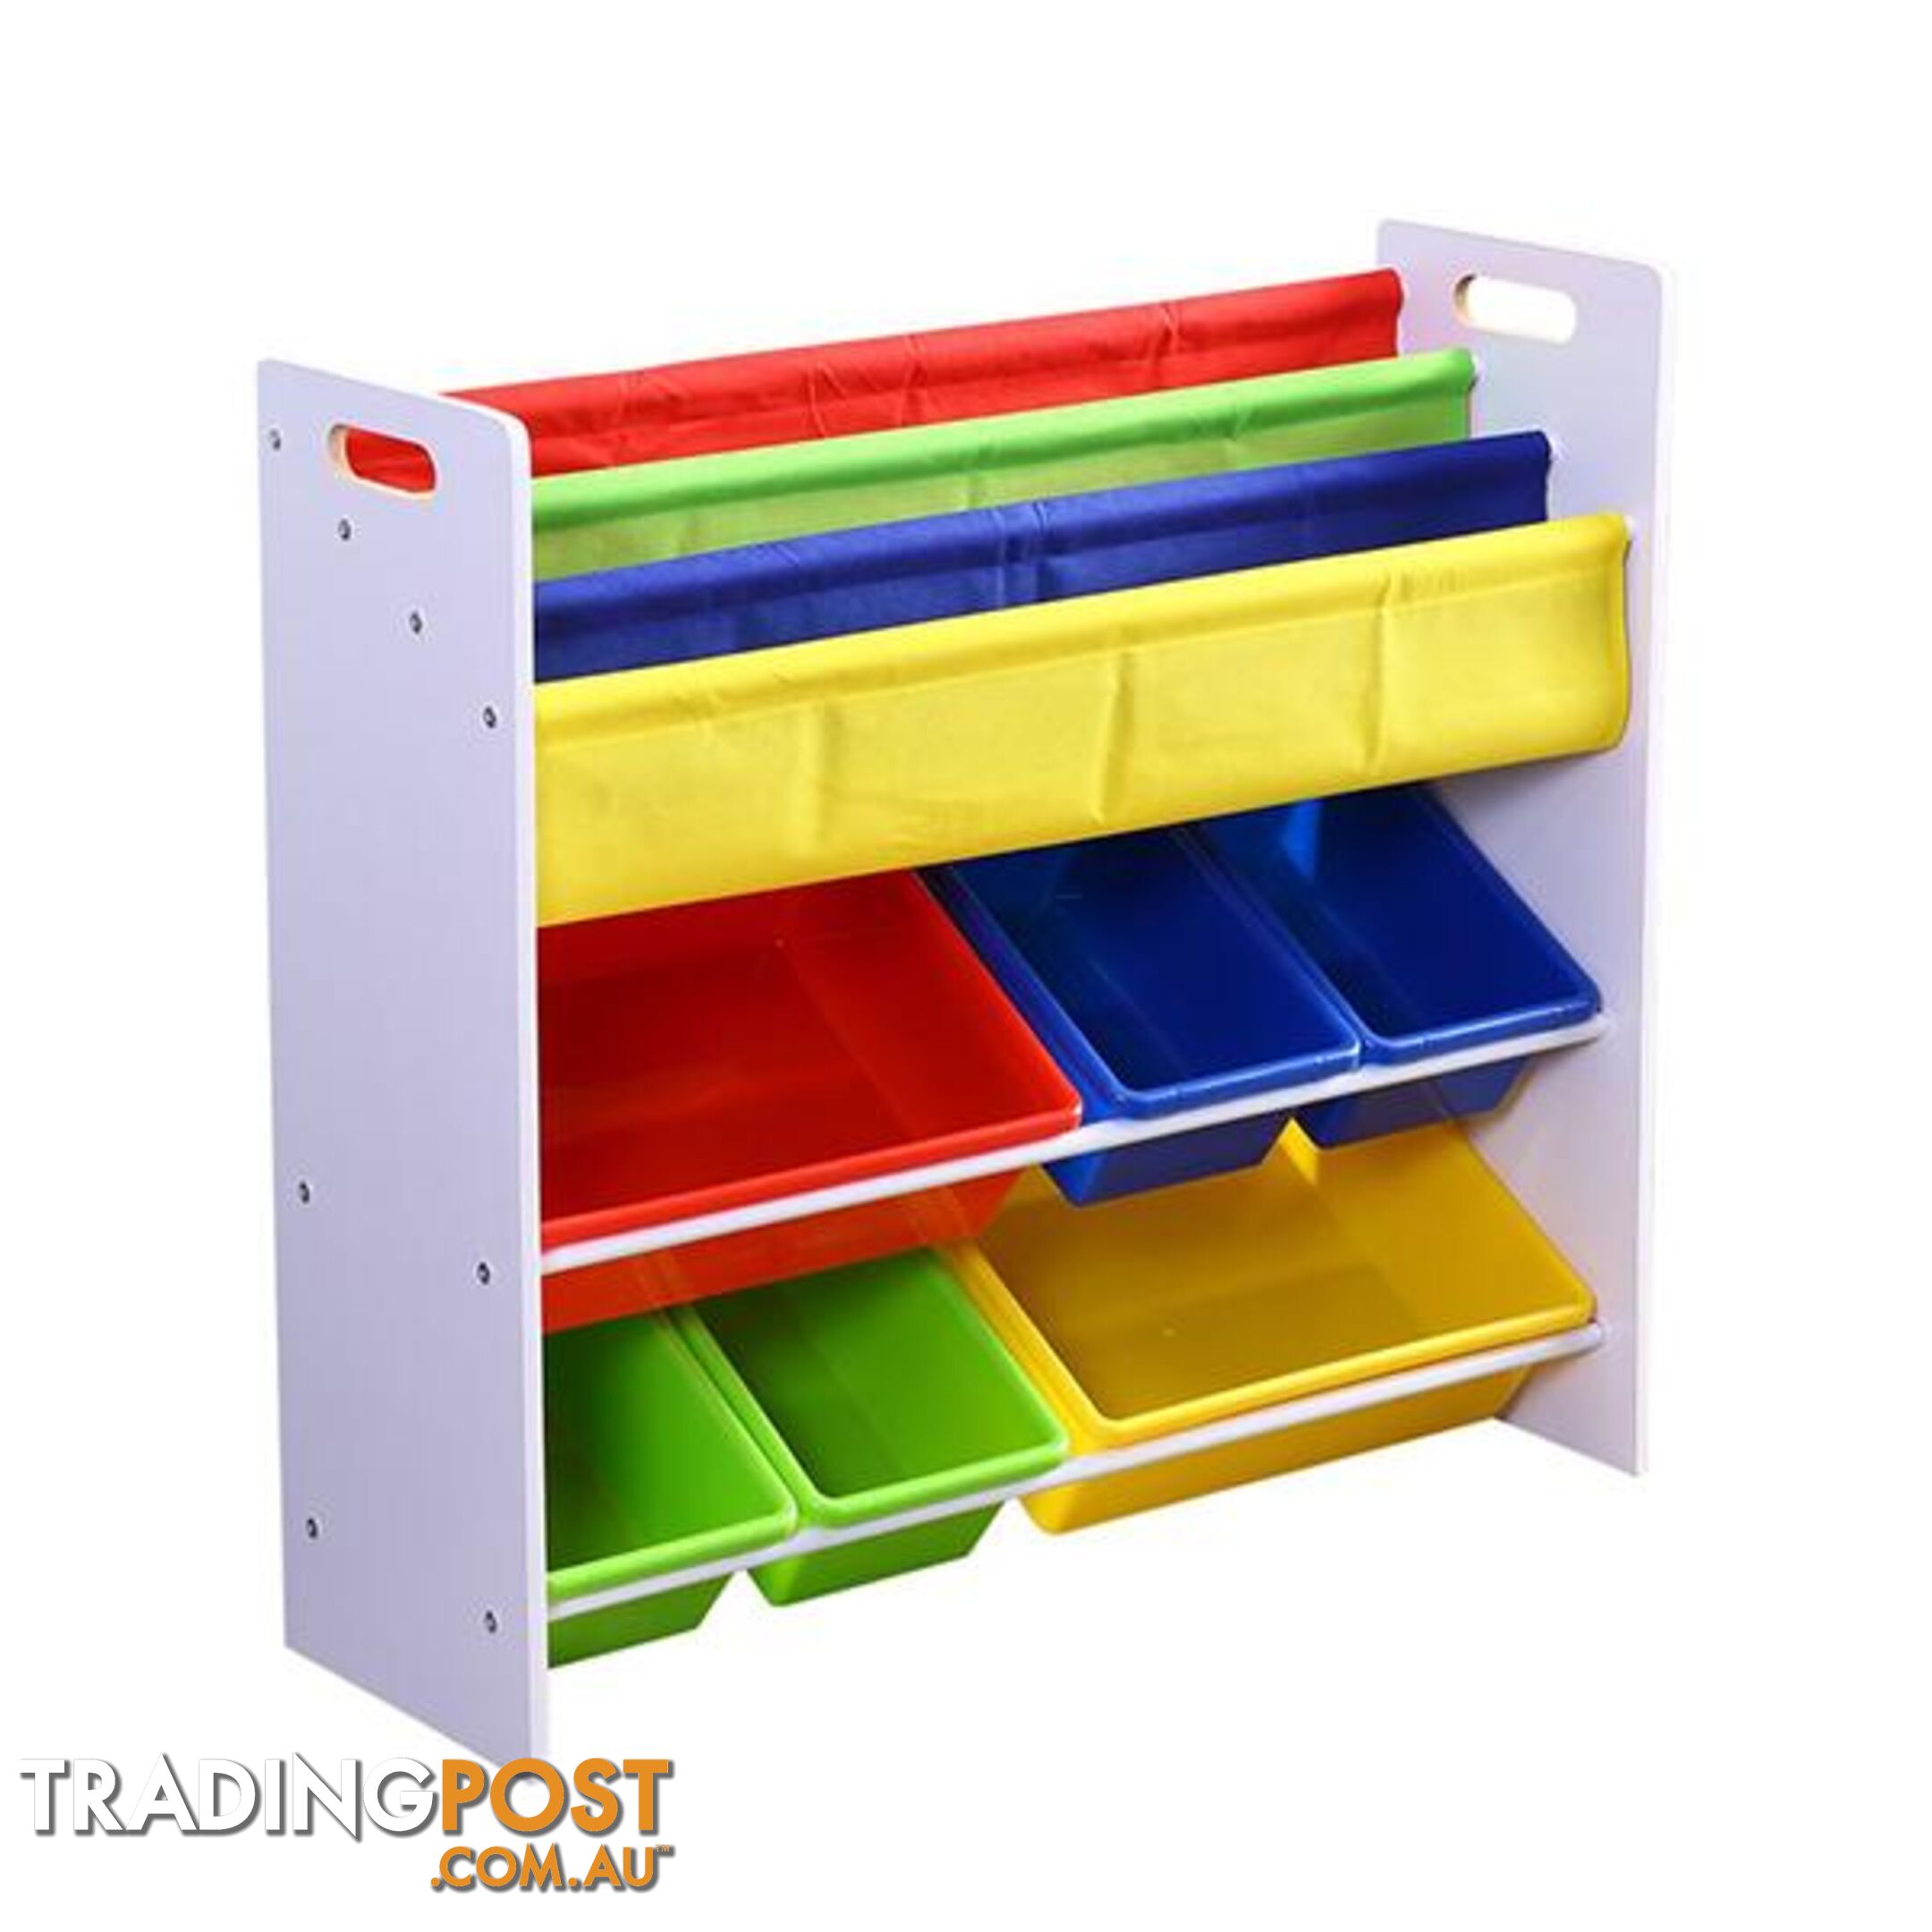 6 Bins Kids Toy Box Bookshelf Organiser Shelf Storage Rack Drawer - Unbranded - 787976570804